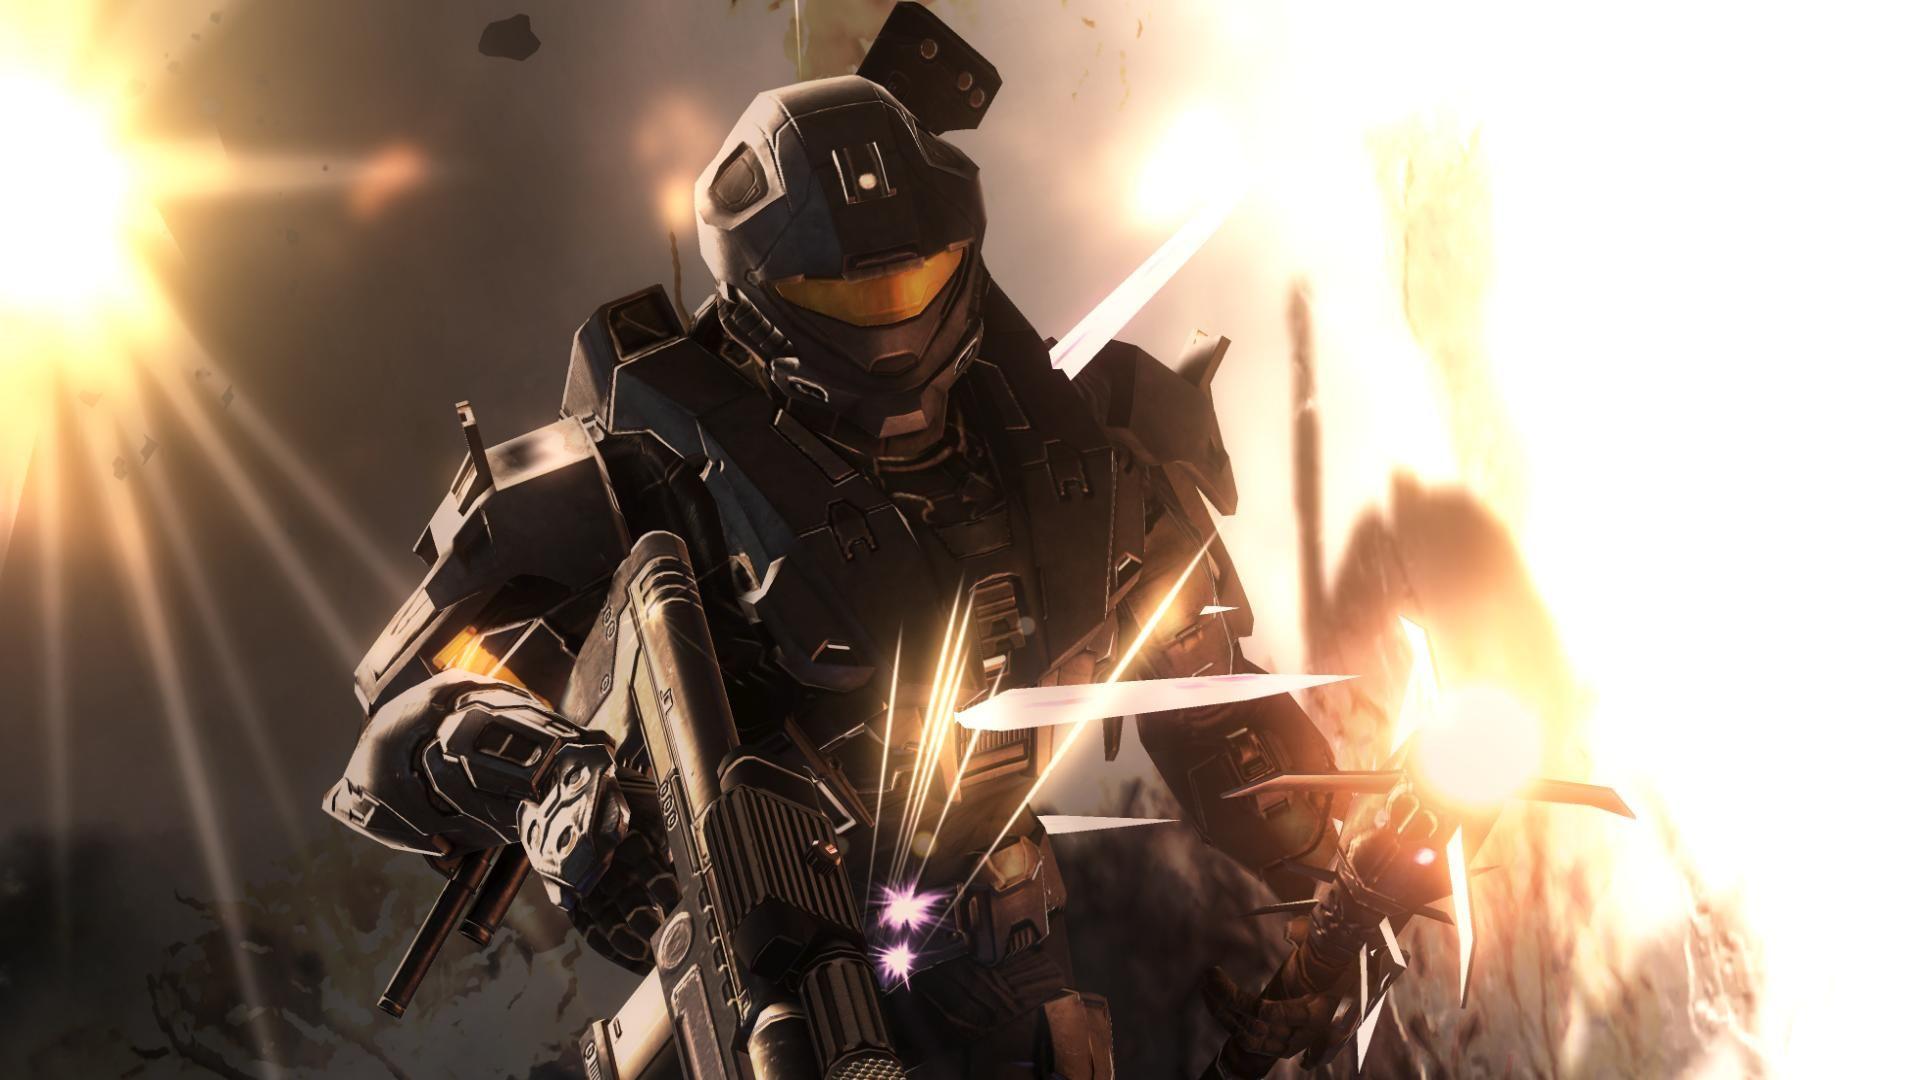 image For > Halo 3 Recon Armor. pics. Halo Halo